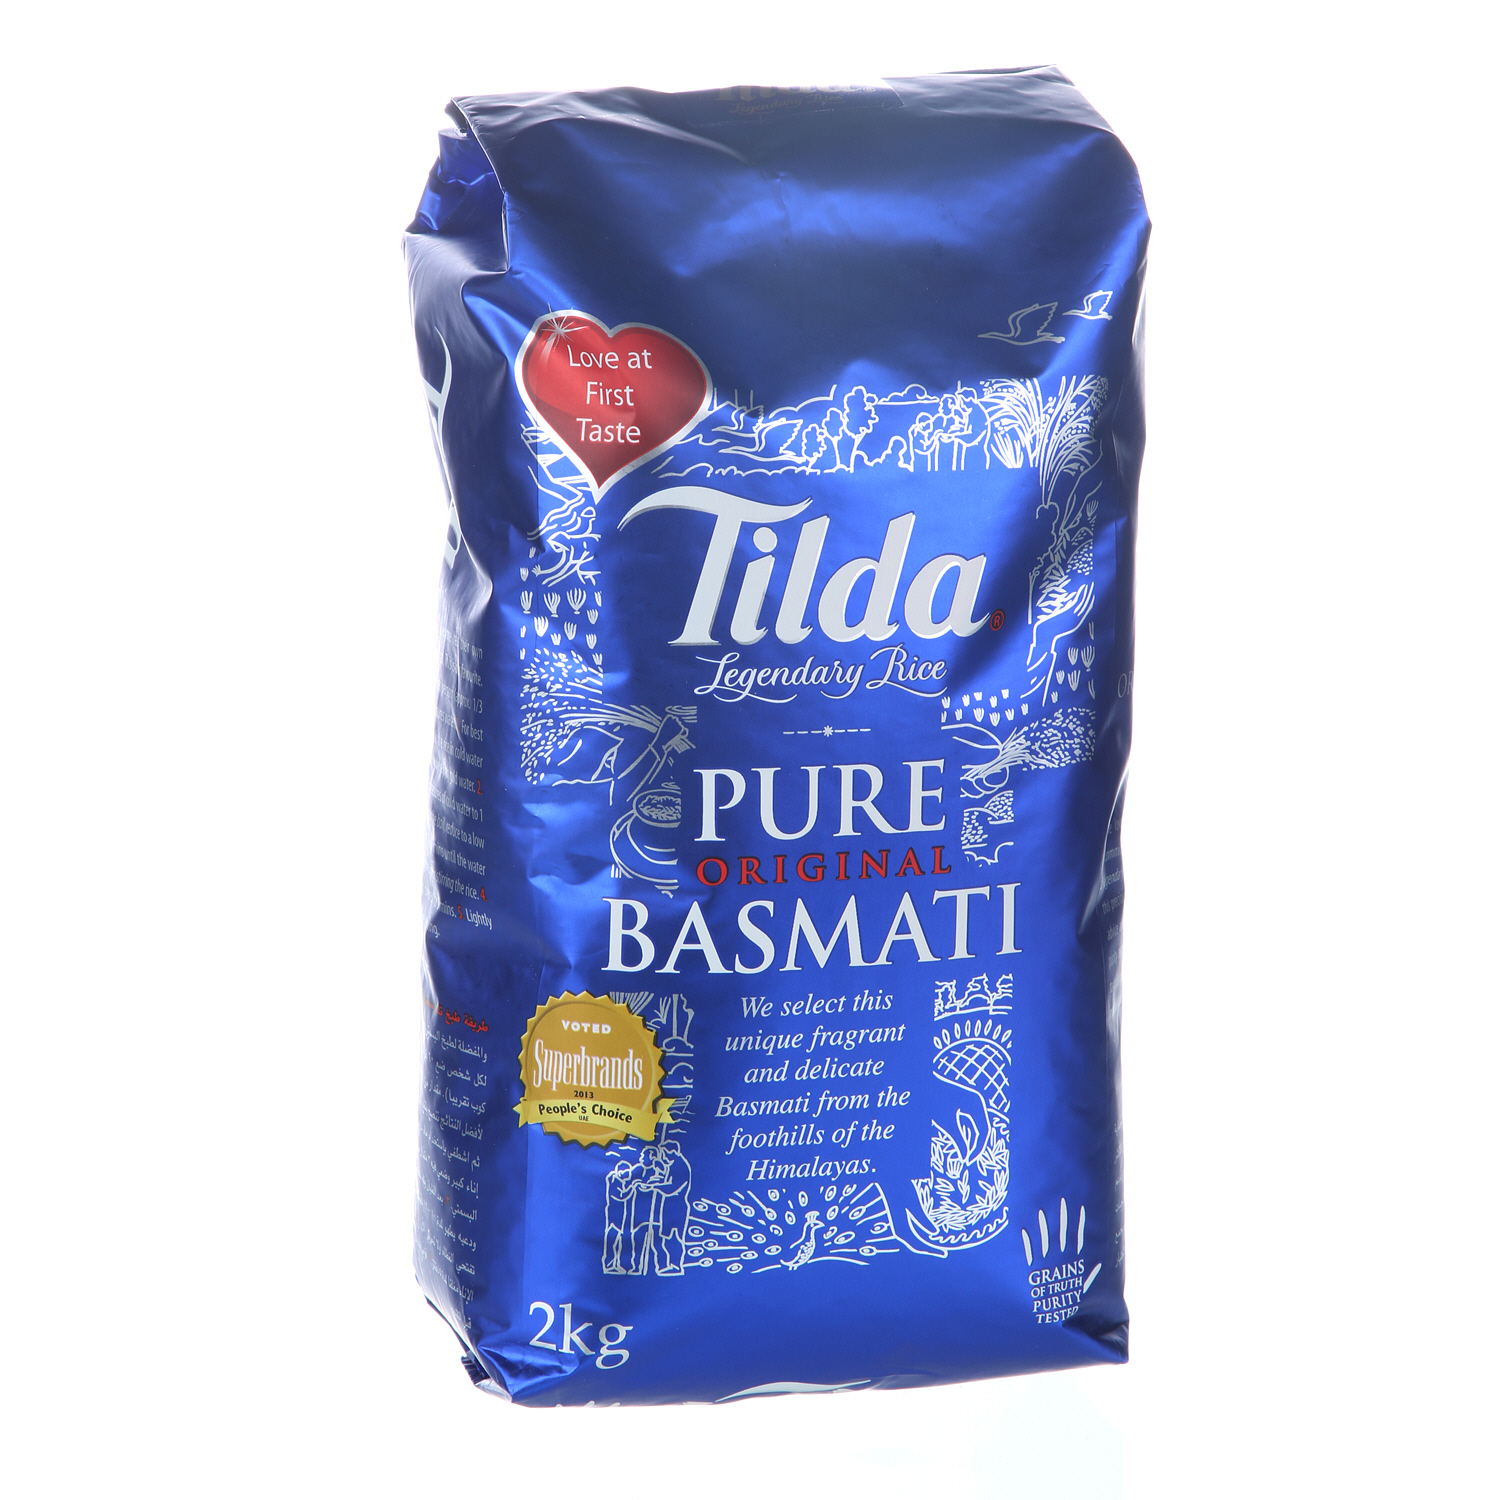 Tilda Basmati Rice 2 Kg